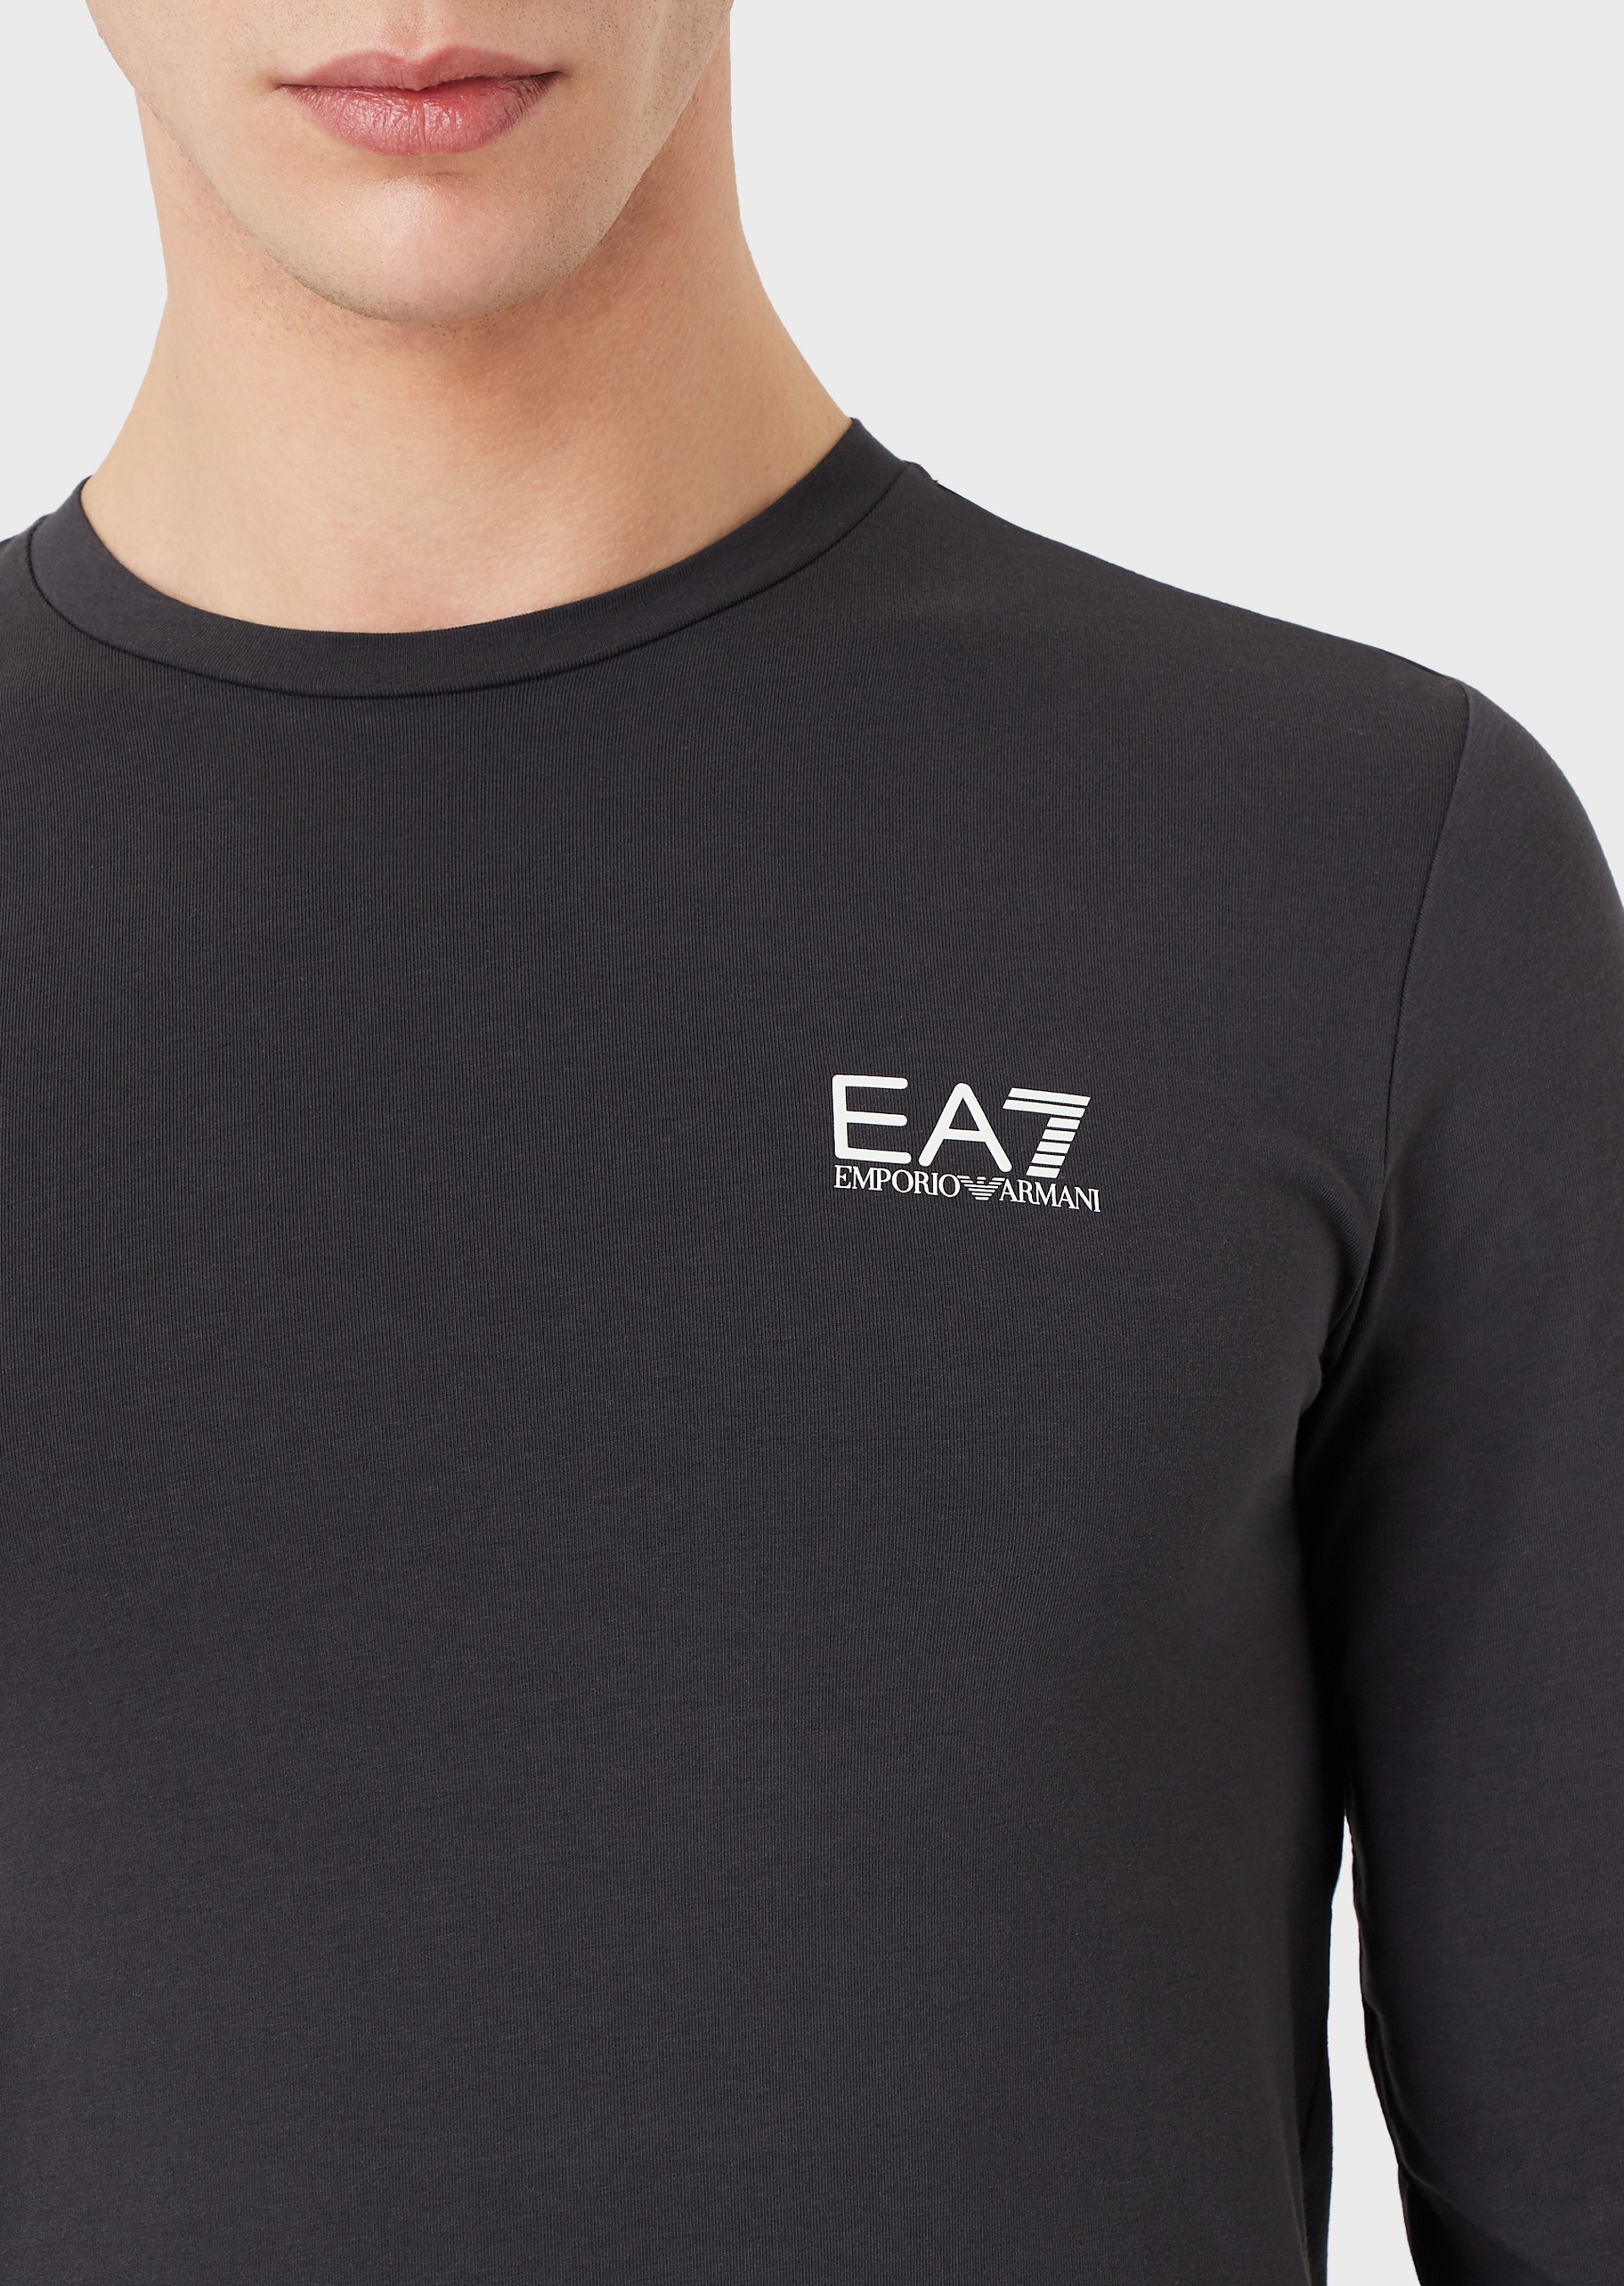 EA7 男士纯棉弹力合身长袖圆领健身训练T恤